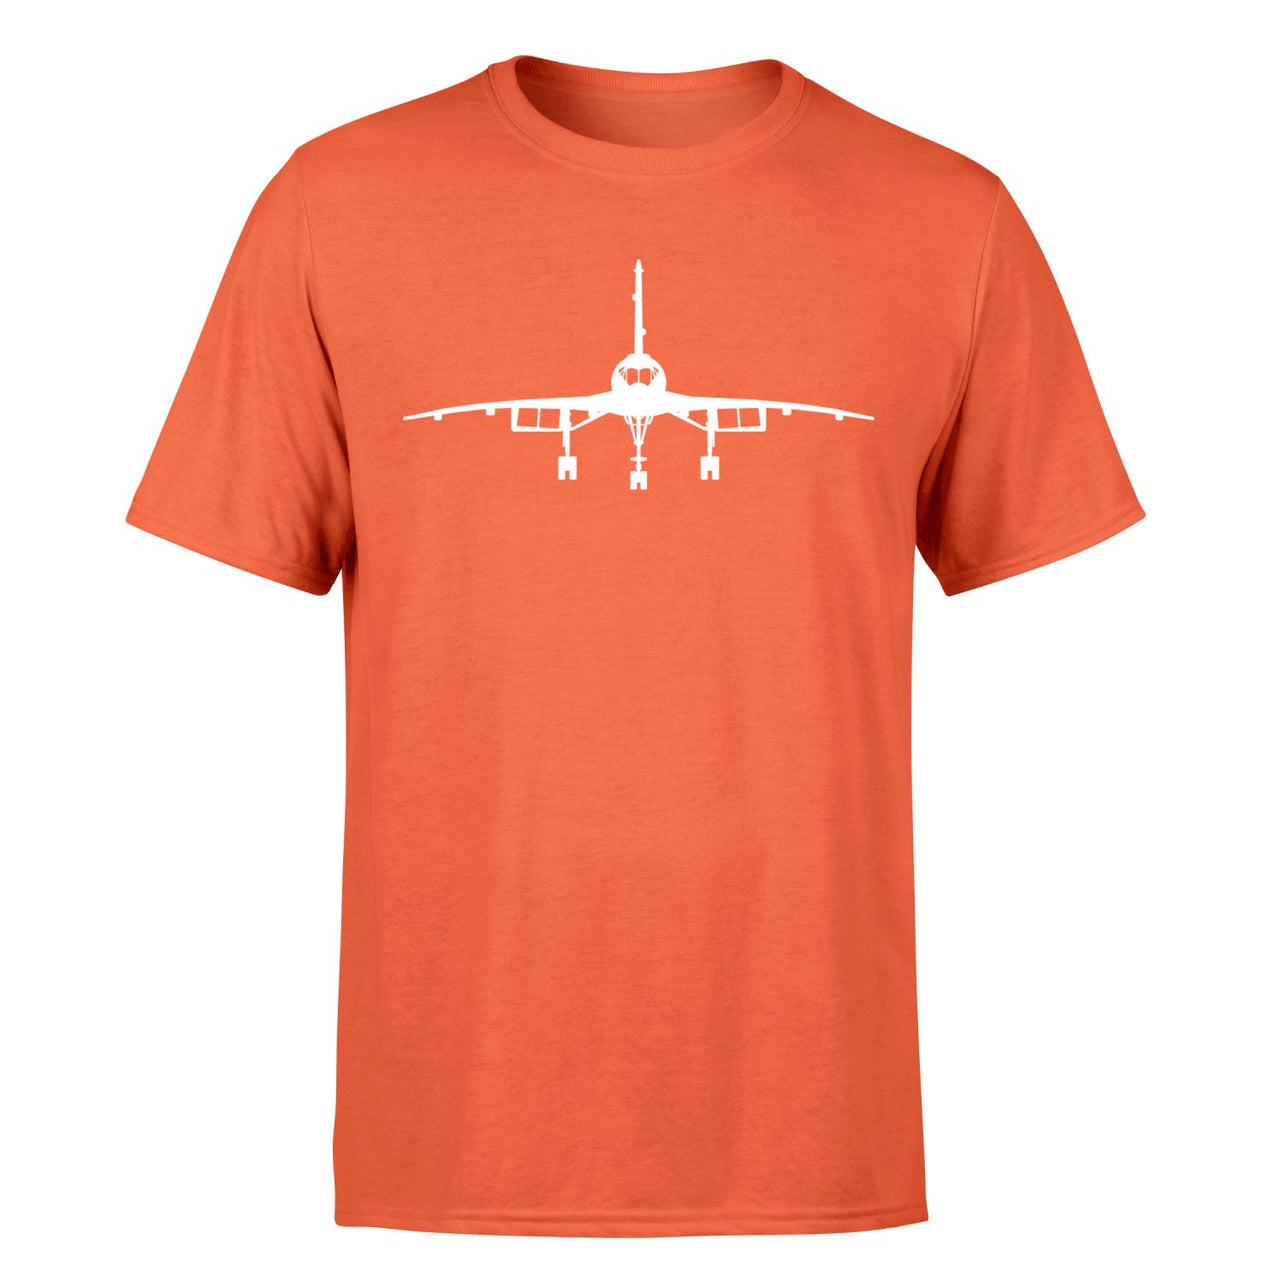 Concorde Silhouette Designed T-Shirts